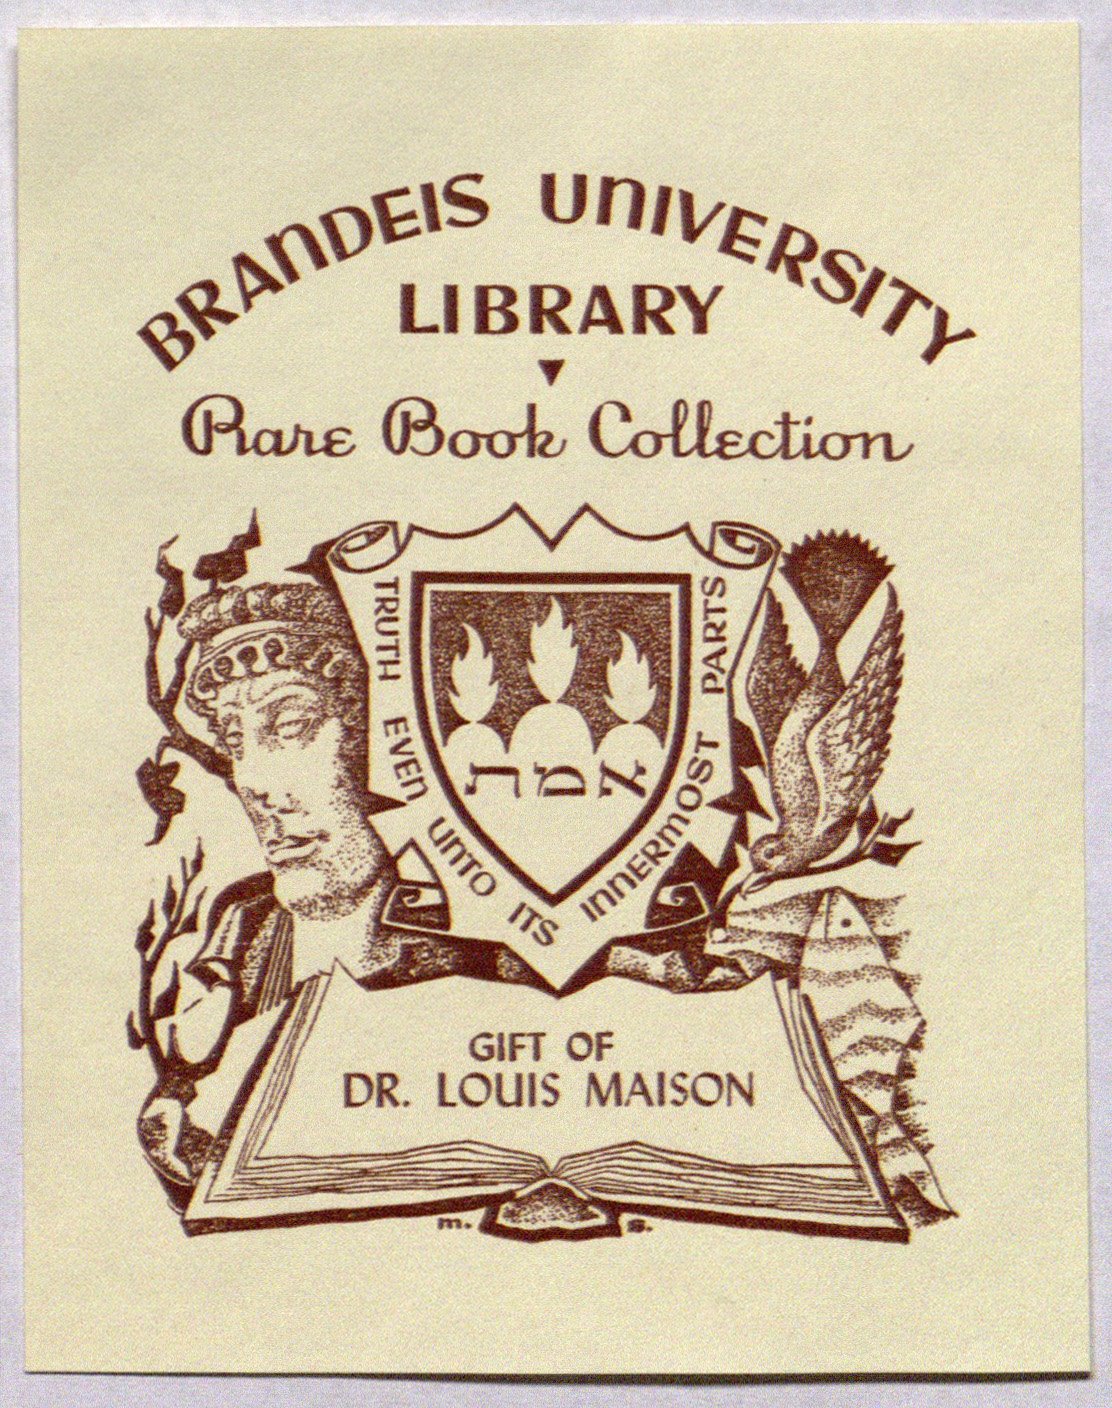 Insignia of Brandeis University's Rare Books Collection